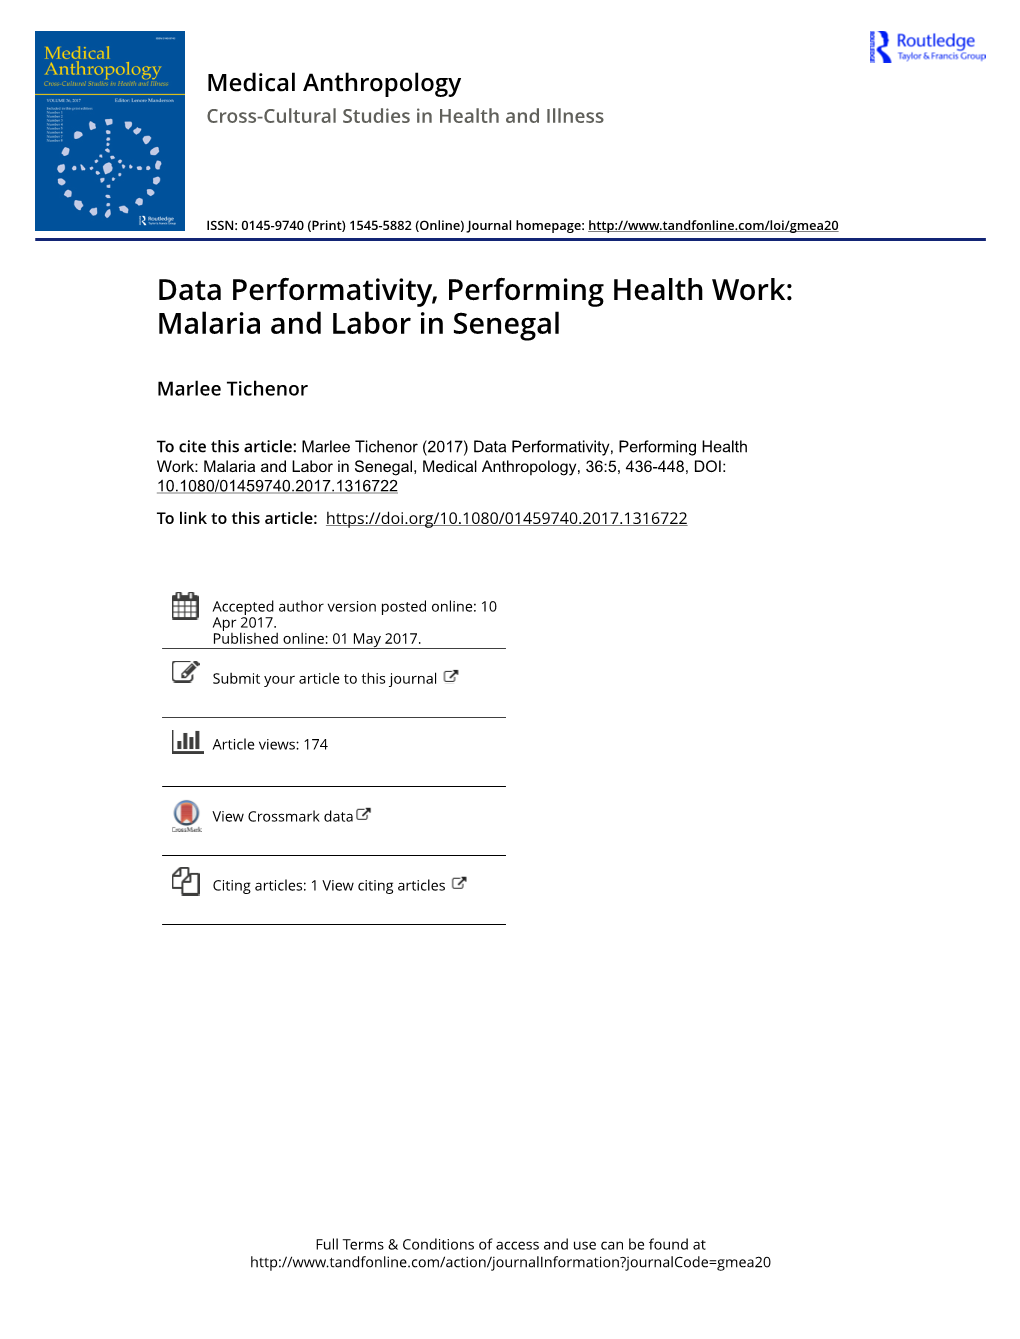 Data Performativity, Performing Health Work: Malaria and Labor in Senegal